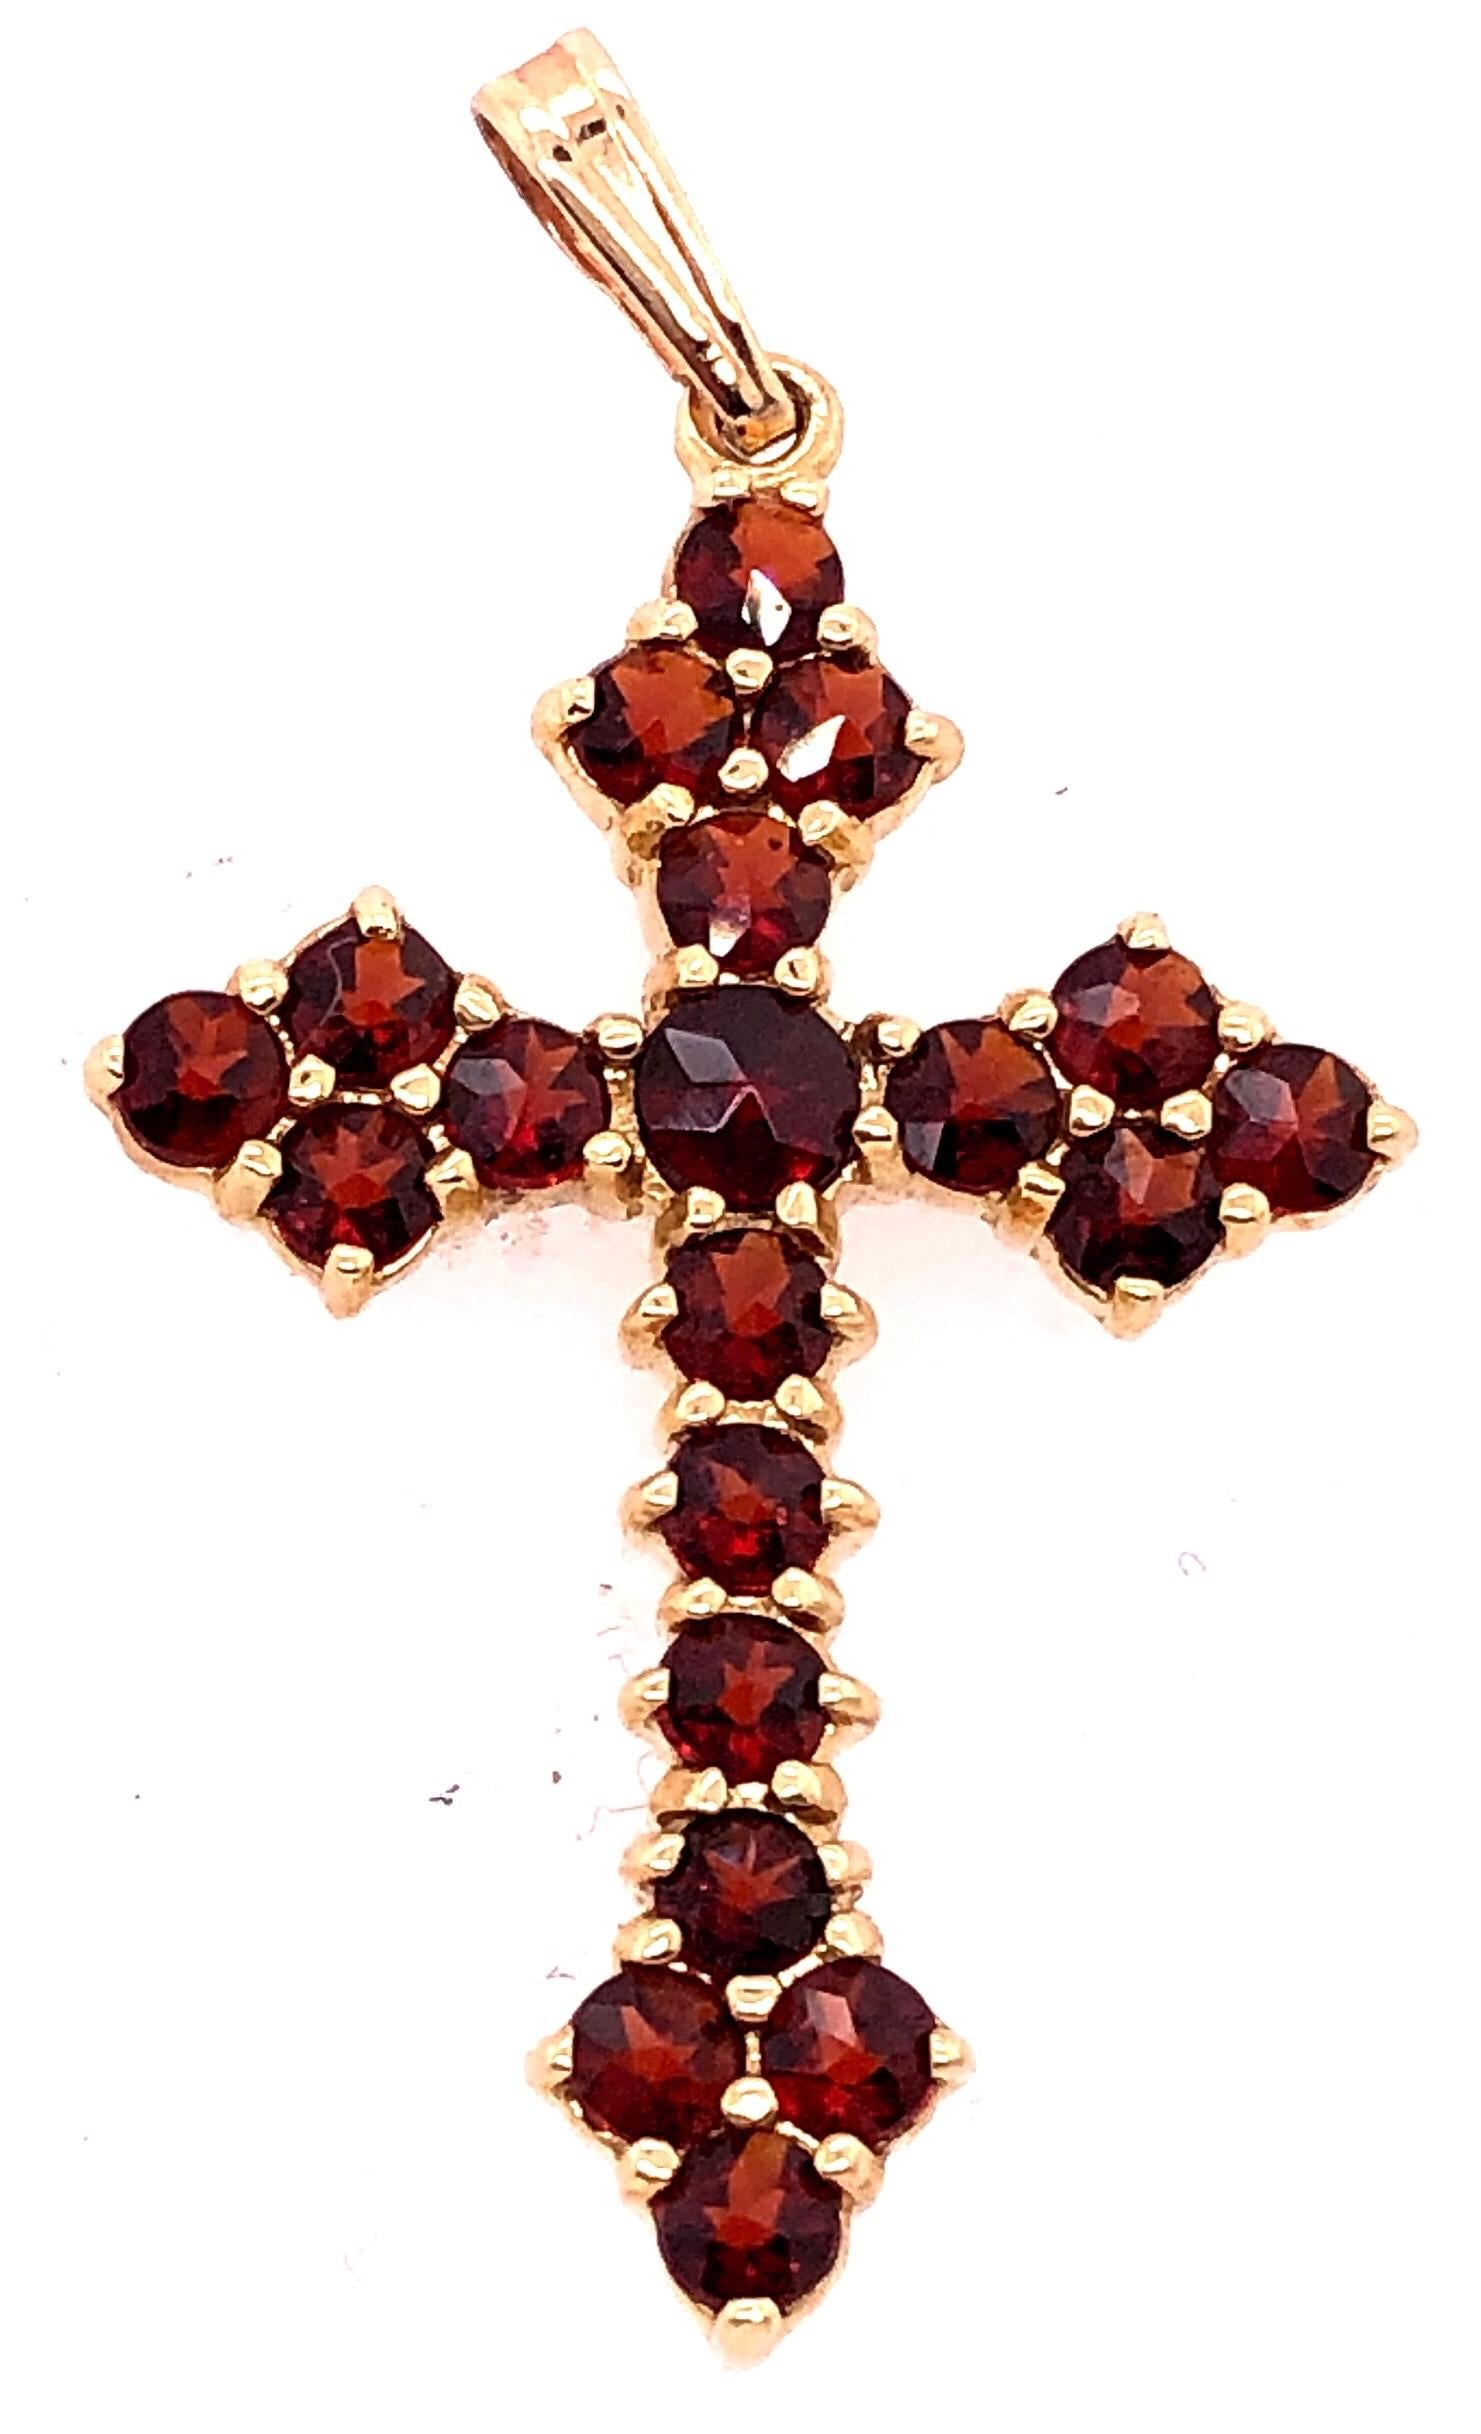 14 Karat Yellow Gold Religious / Crucifix Pendant with Semi Precious Stones.
3 grams total weight.